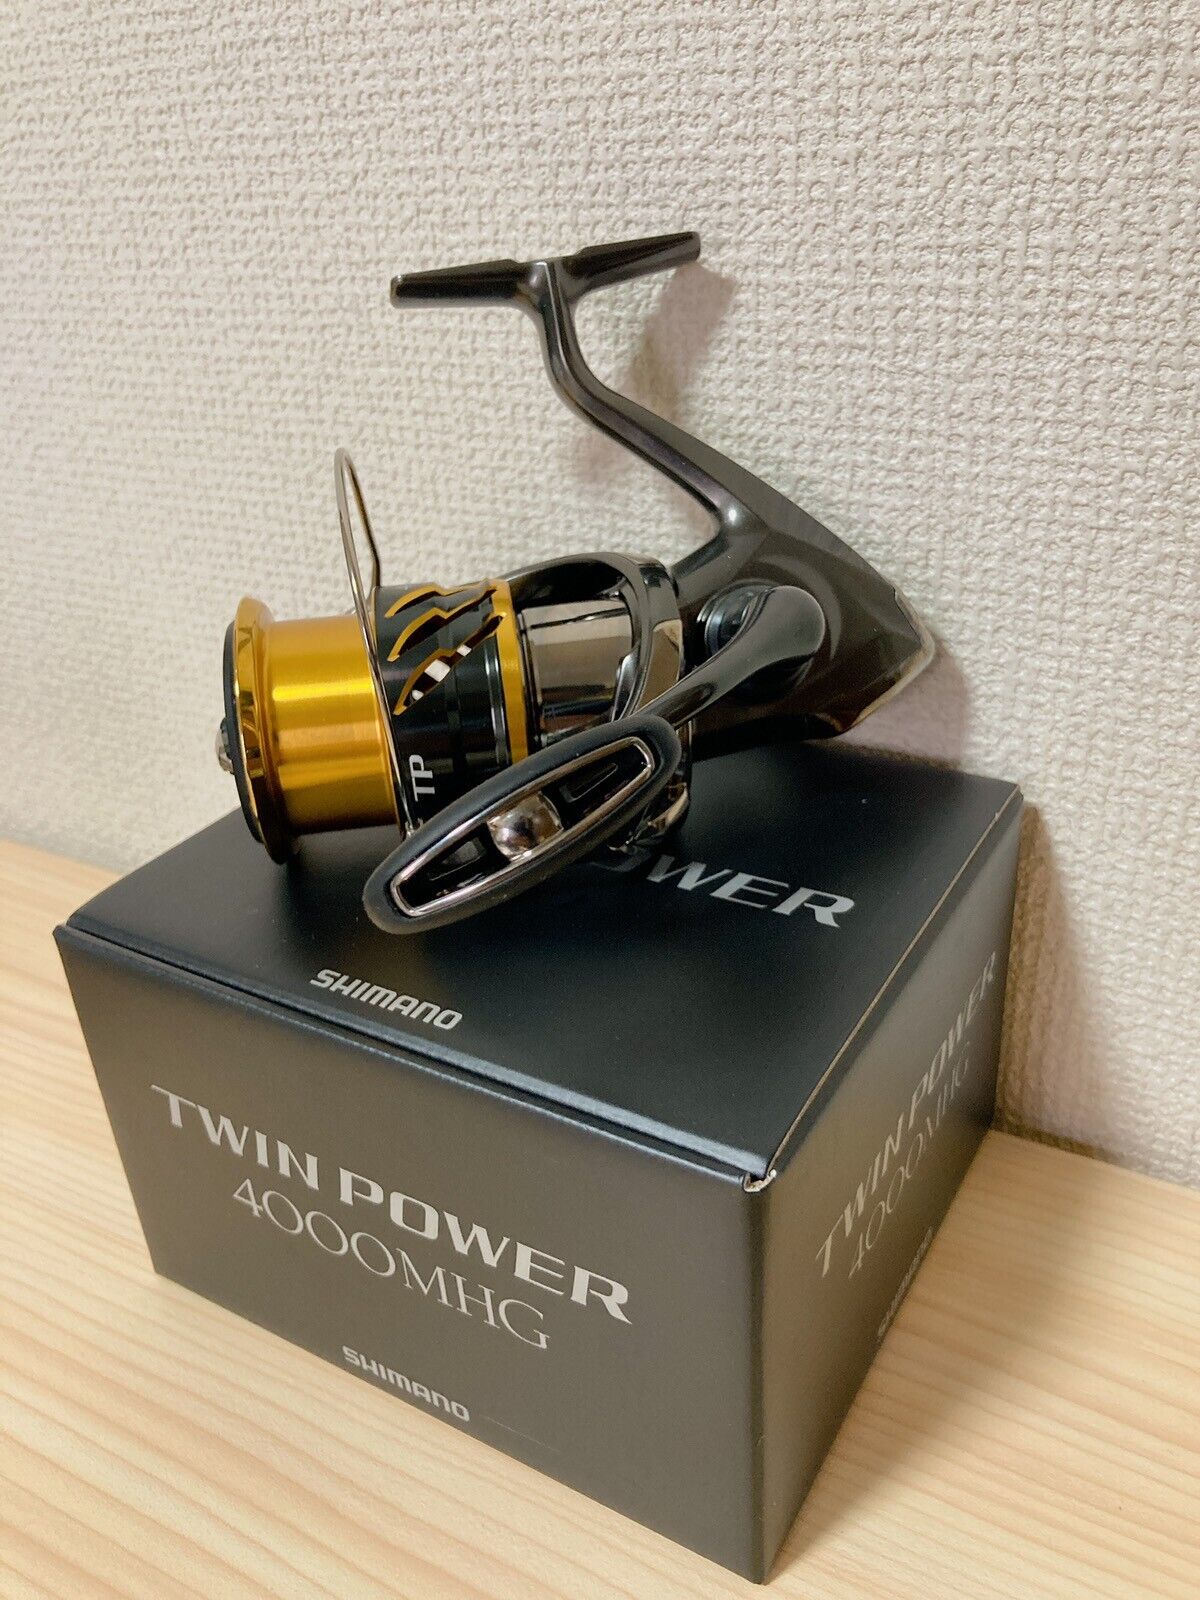 Shimano Spinning Reel 20 TWIN POWER 4000MHG Gear Ratio 5.8:1 Fishing Reel  IN BOX